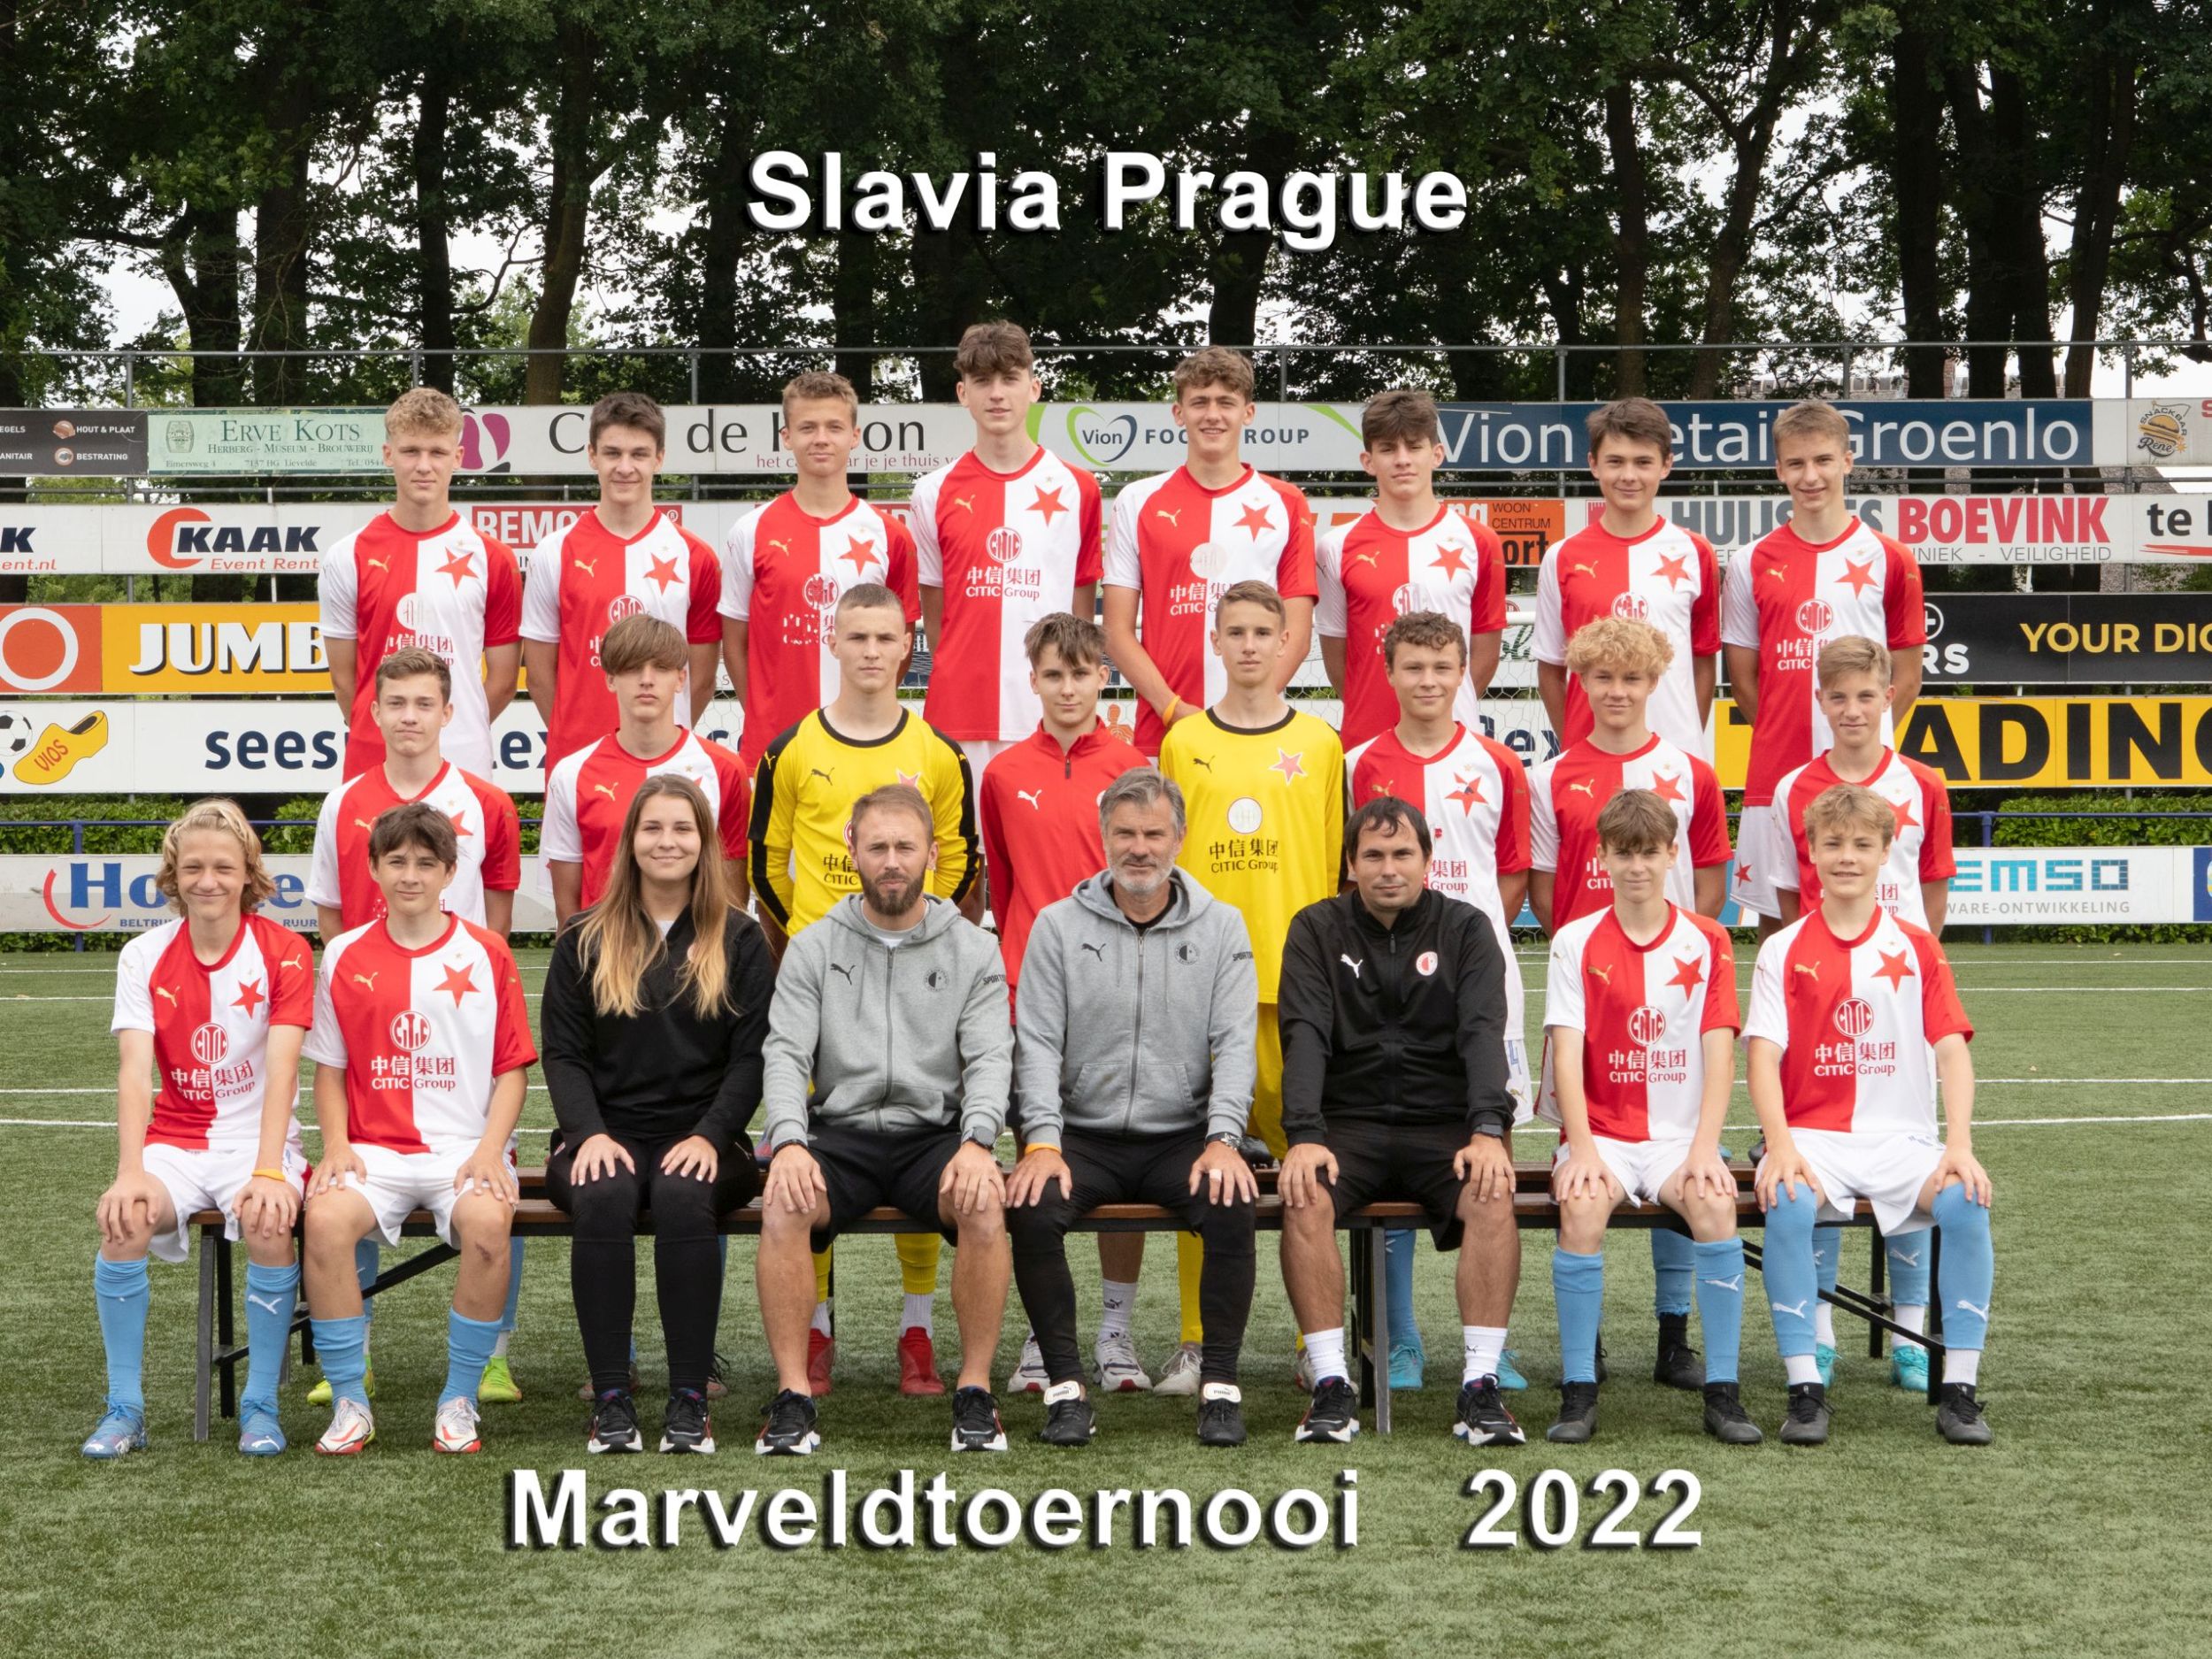 Marveld Tournament 2022 - Team Slavia Prague